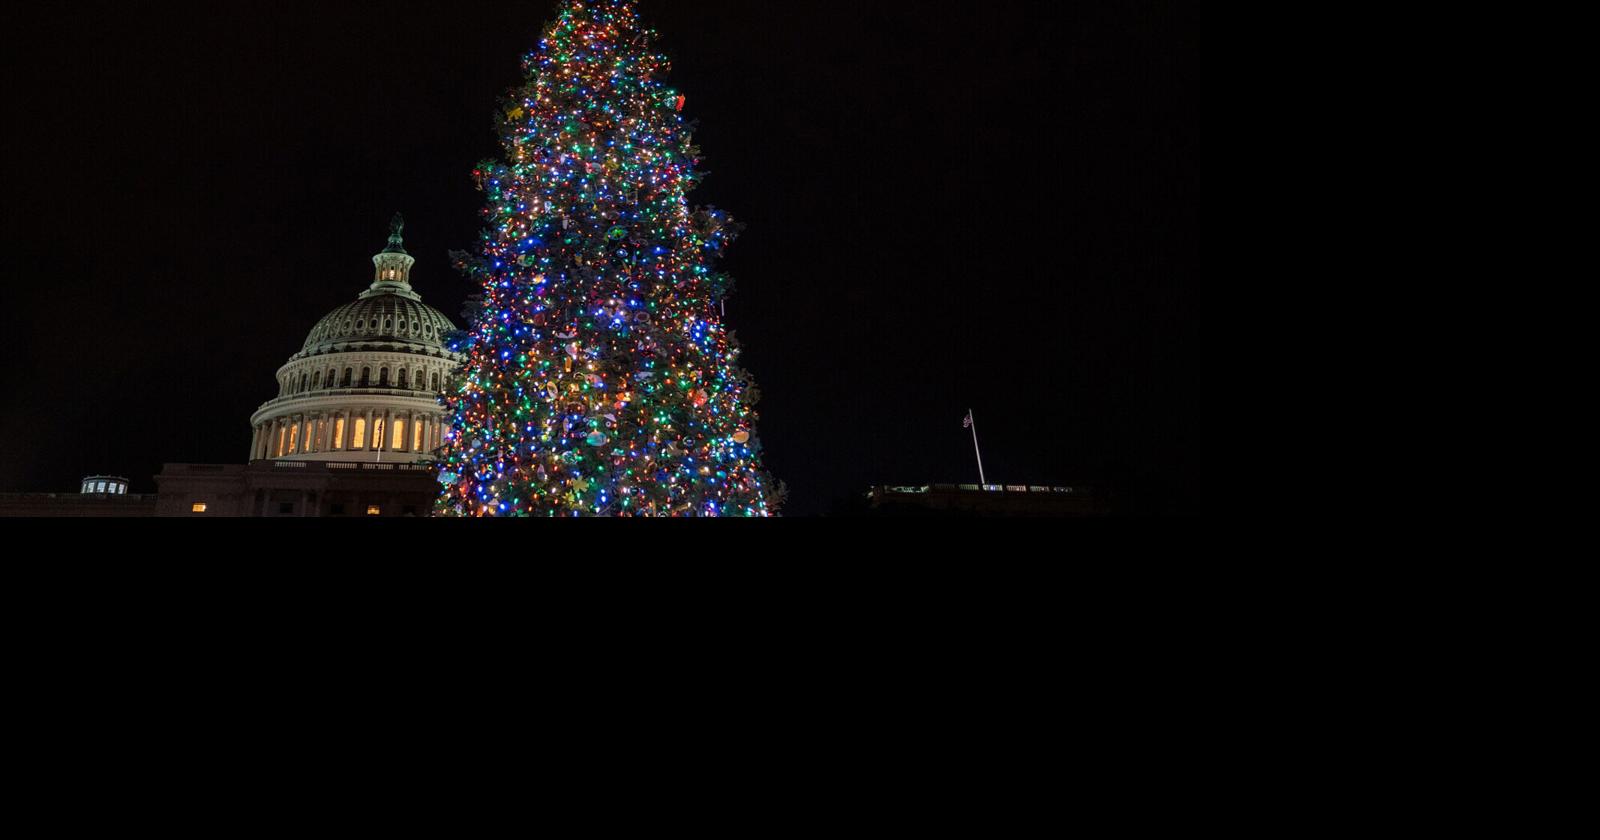 Marion is a stop on Capitol Christmas Tree Tour. North Carolina to Washington, D.C. Nov. 5-18